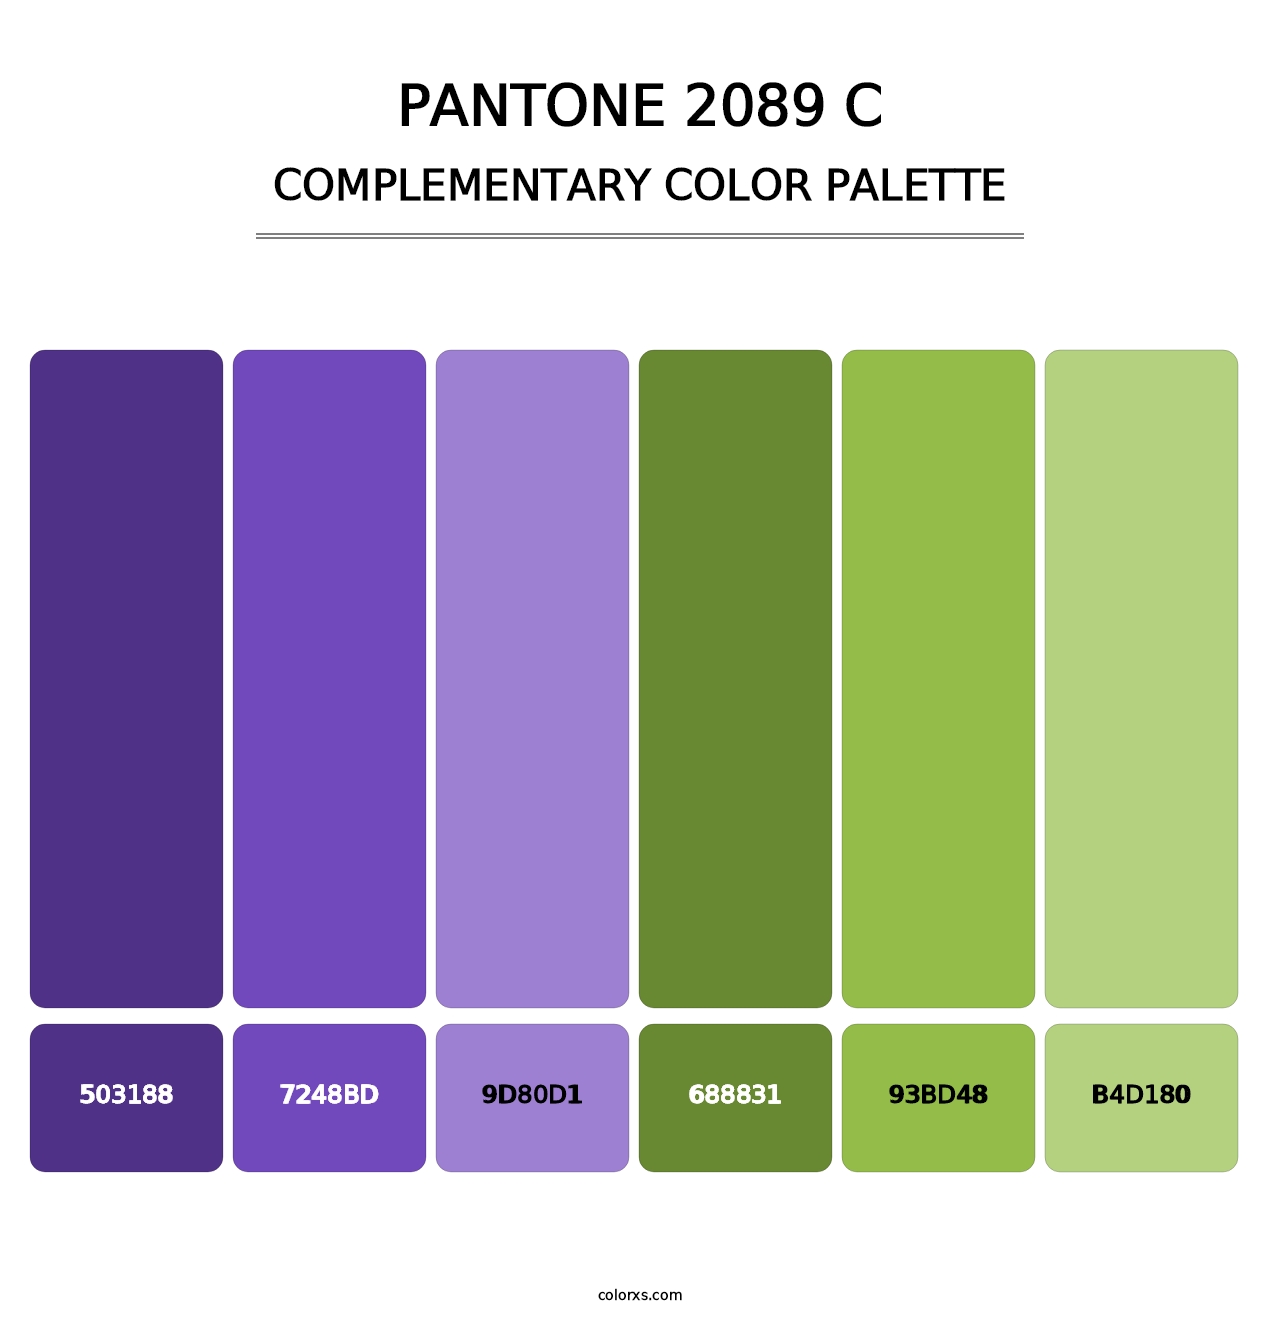 PANTONE 2089 C - Complementary Color Palette